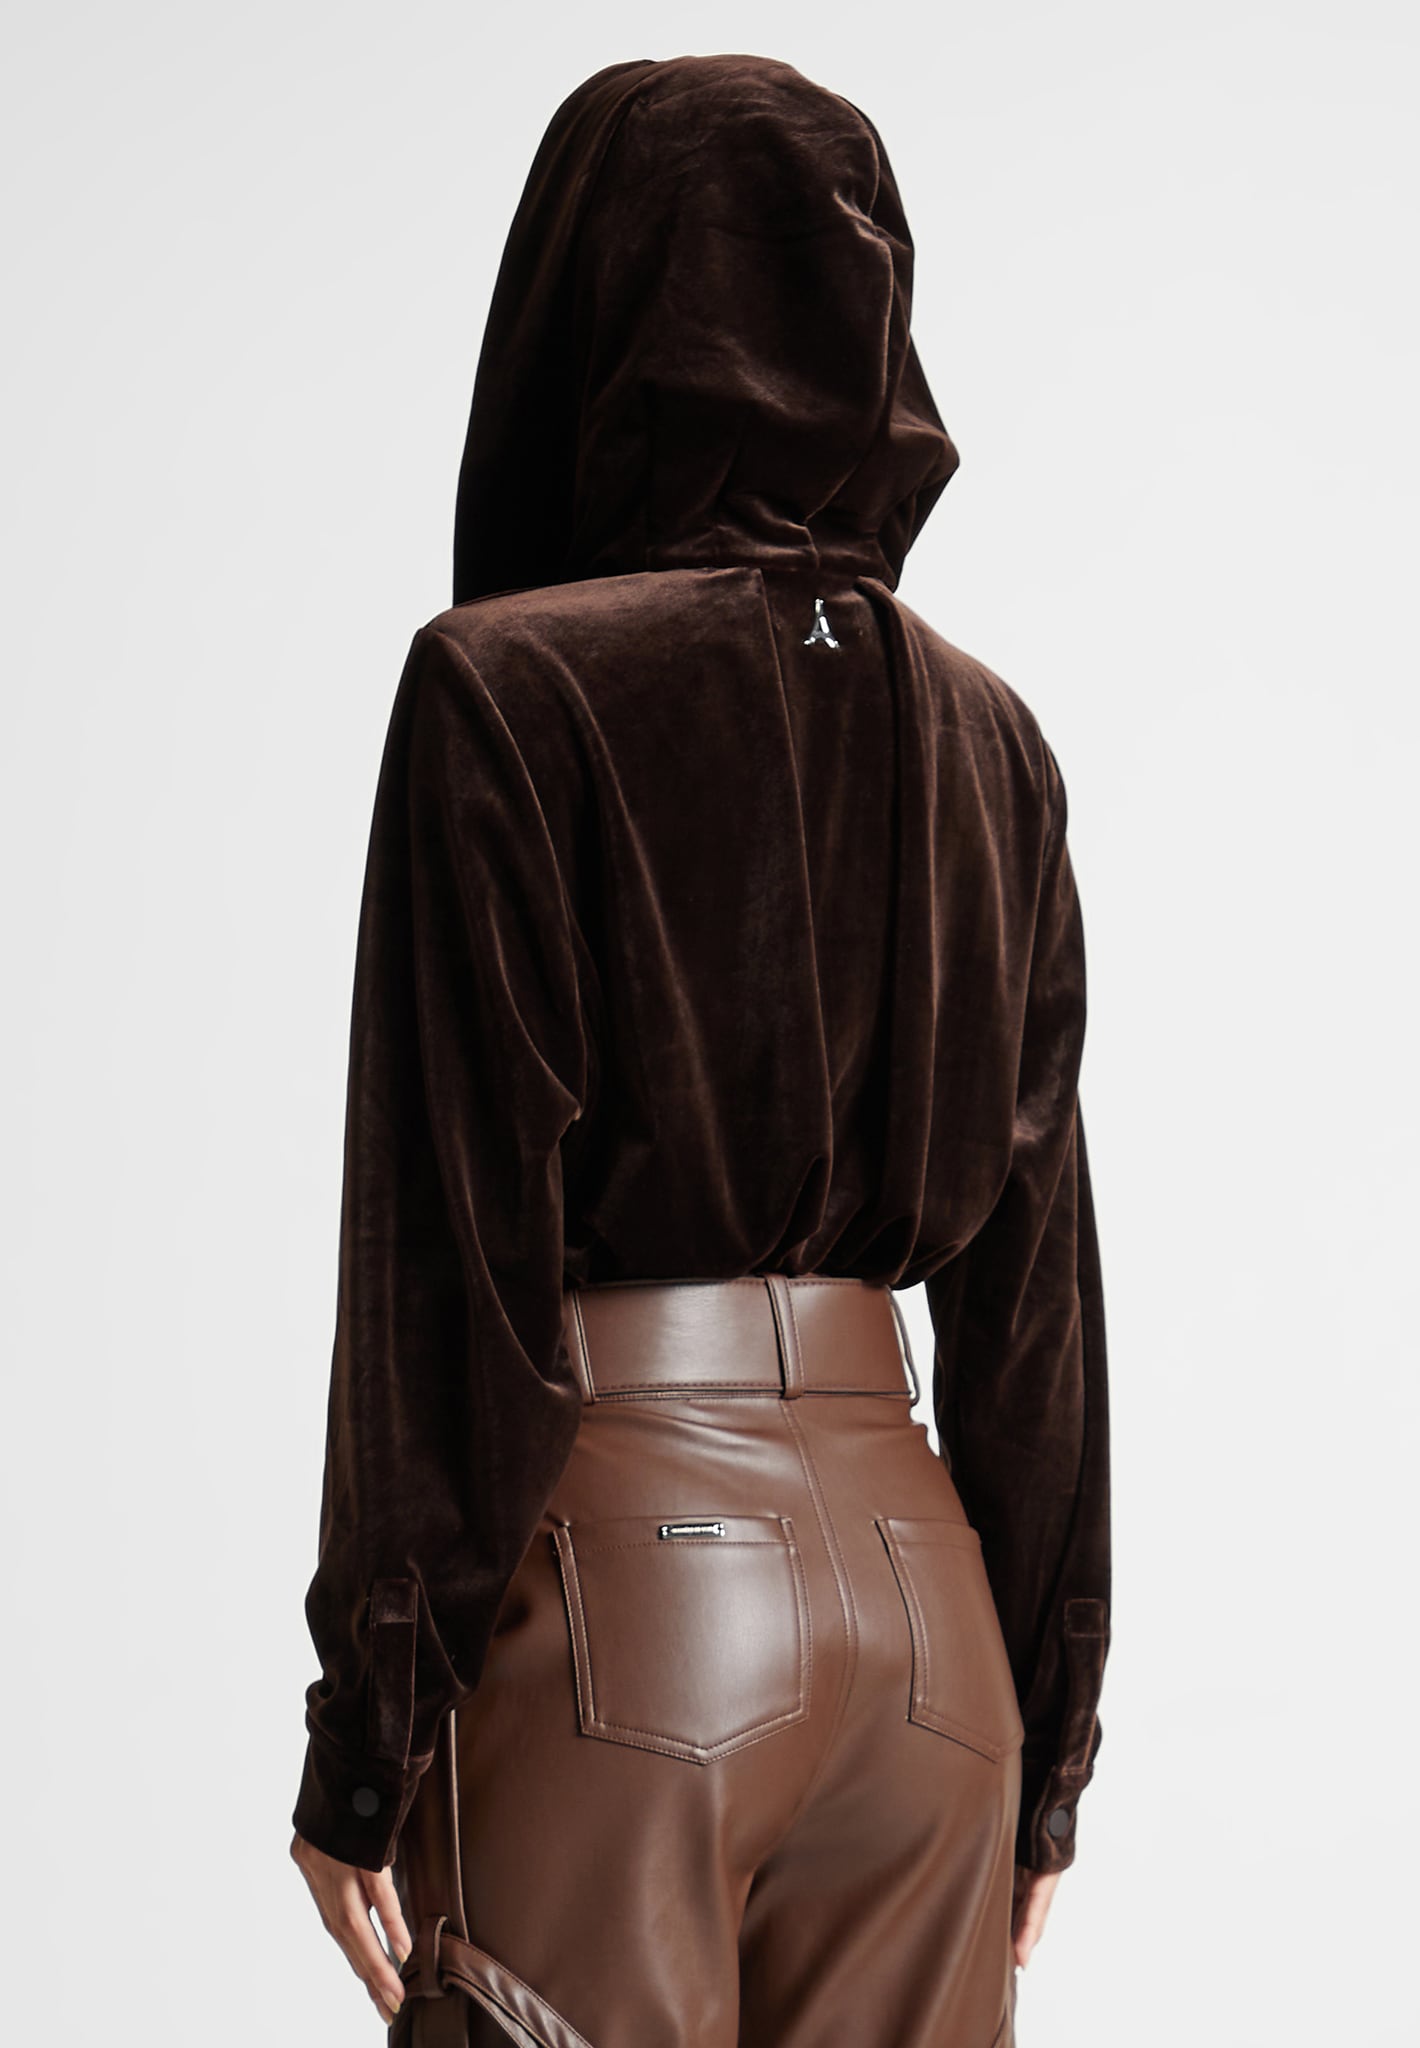 Short Sleeve Bodysuit with Hood - Black